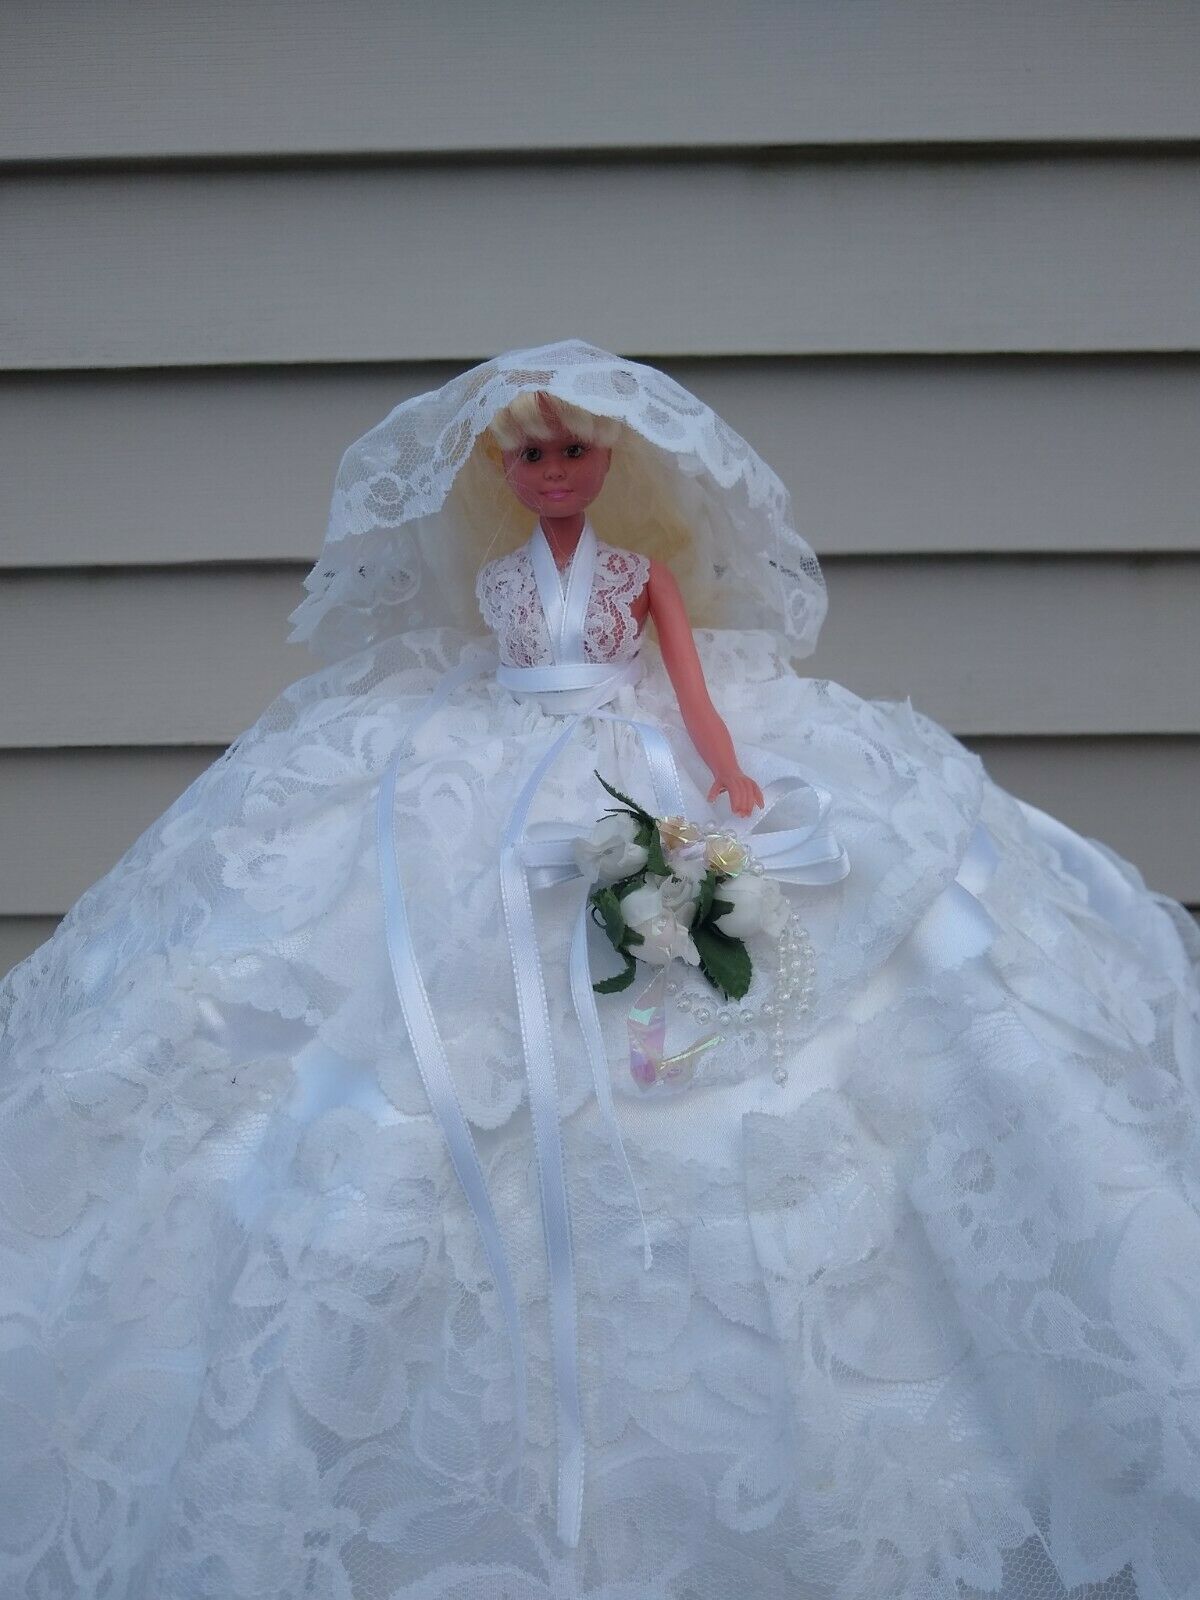 Wedding Pin Cushion Doll Handmade White Satin & Lace Tiered Centerpiece Gift Etc